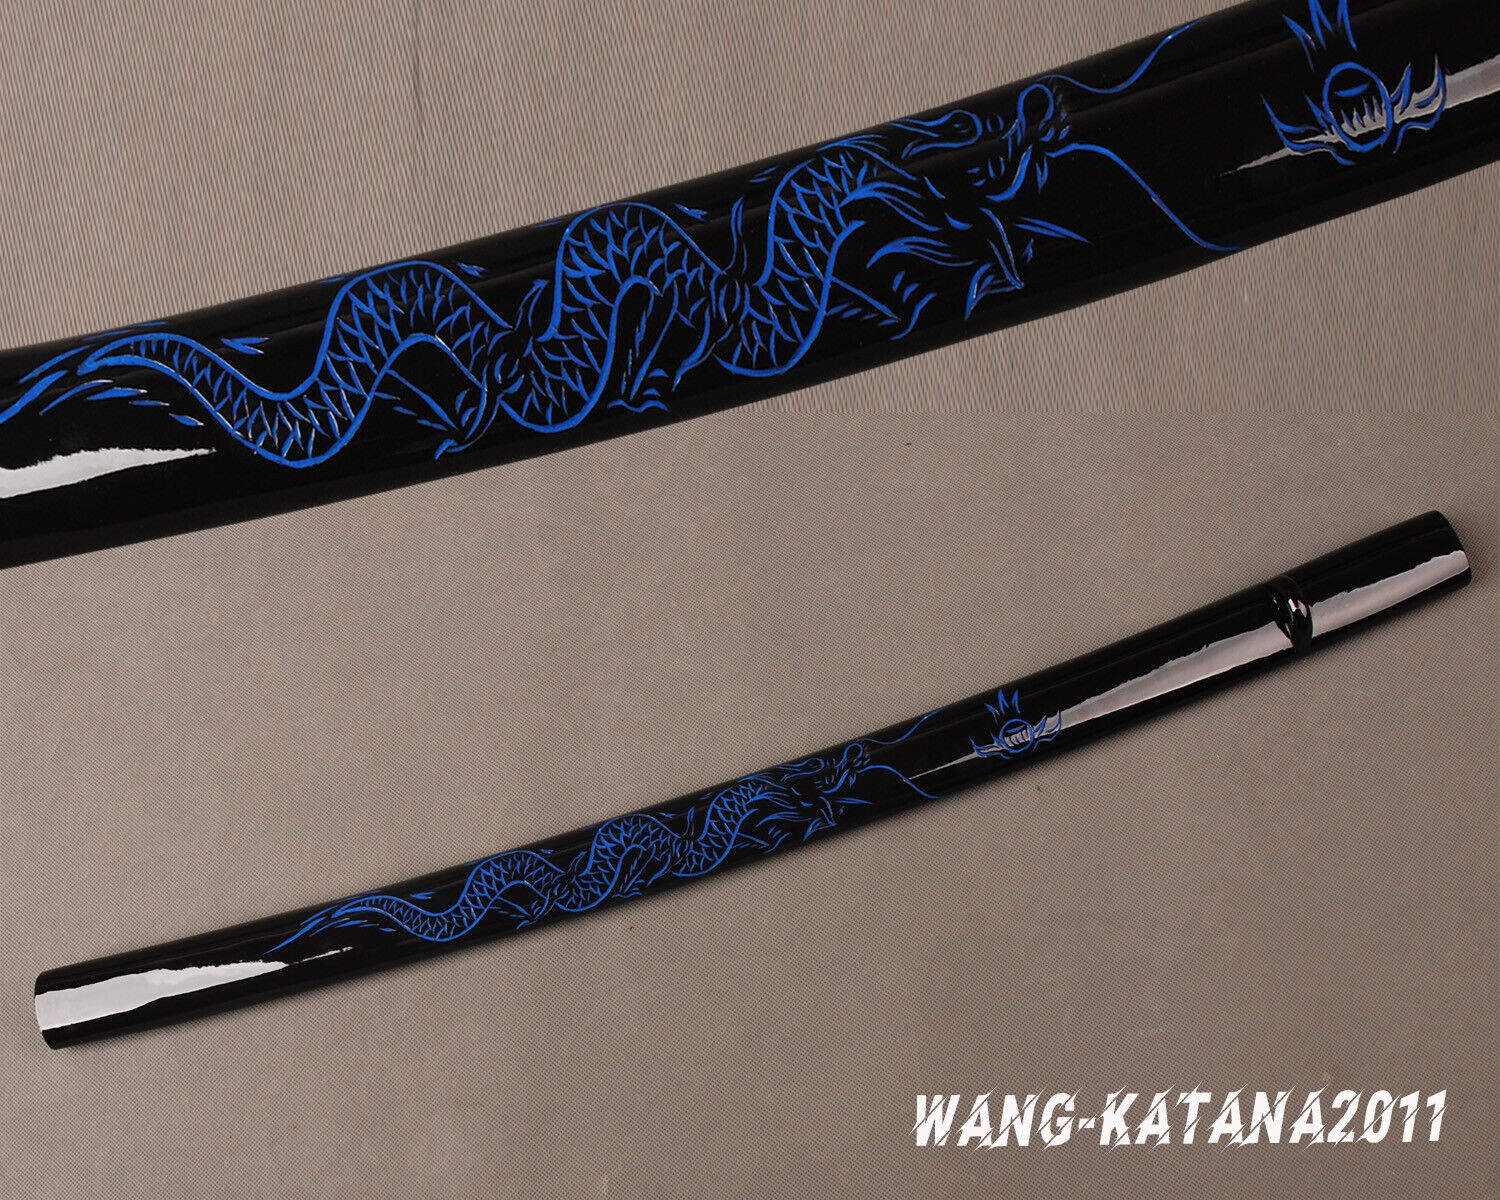 Handmade Blue Dragon Lacquered Saya Sheath Scabbard for Japanese Katana Sword 